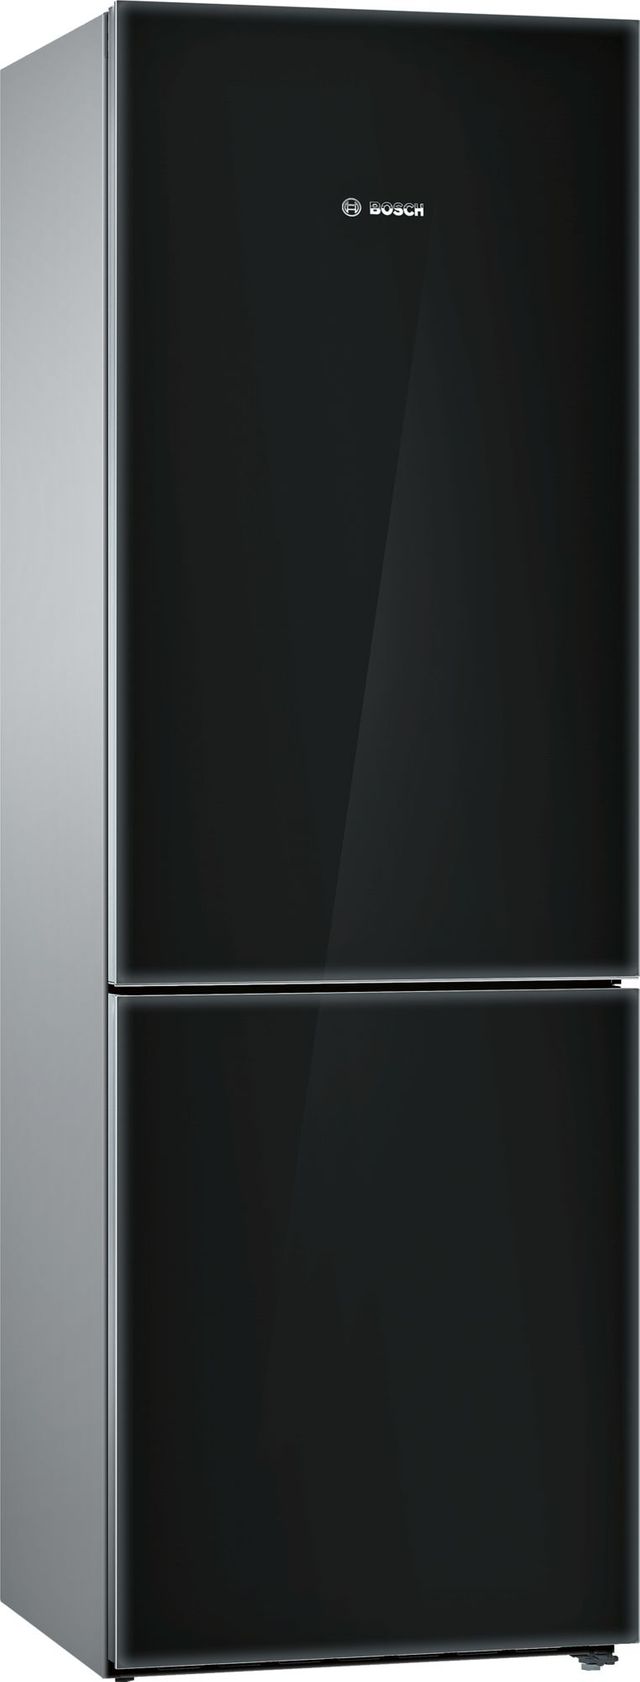 Bosch 800 Series 10.0 Cu. Ft. Counter Depth Bottom Freezer Refrigerator-Black Glass 2